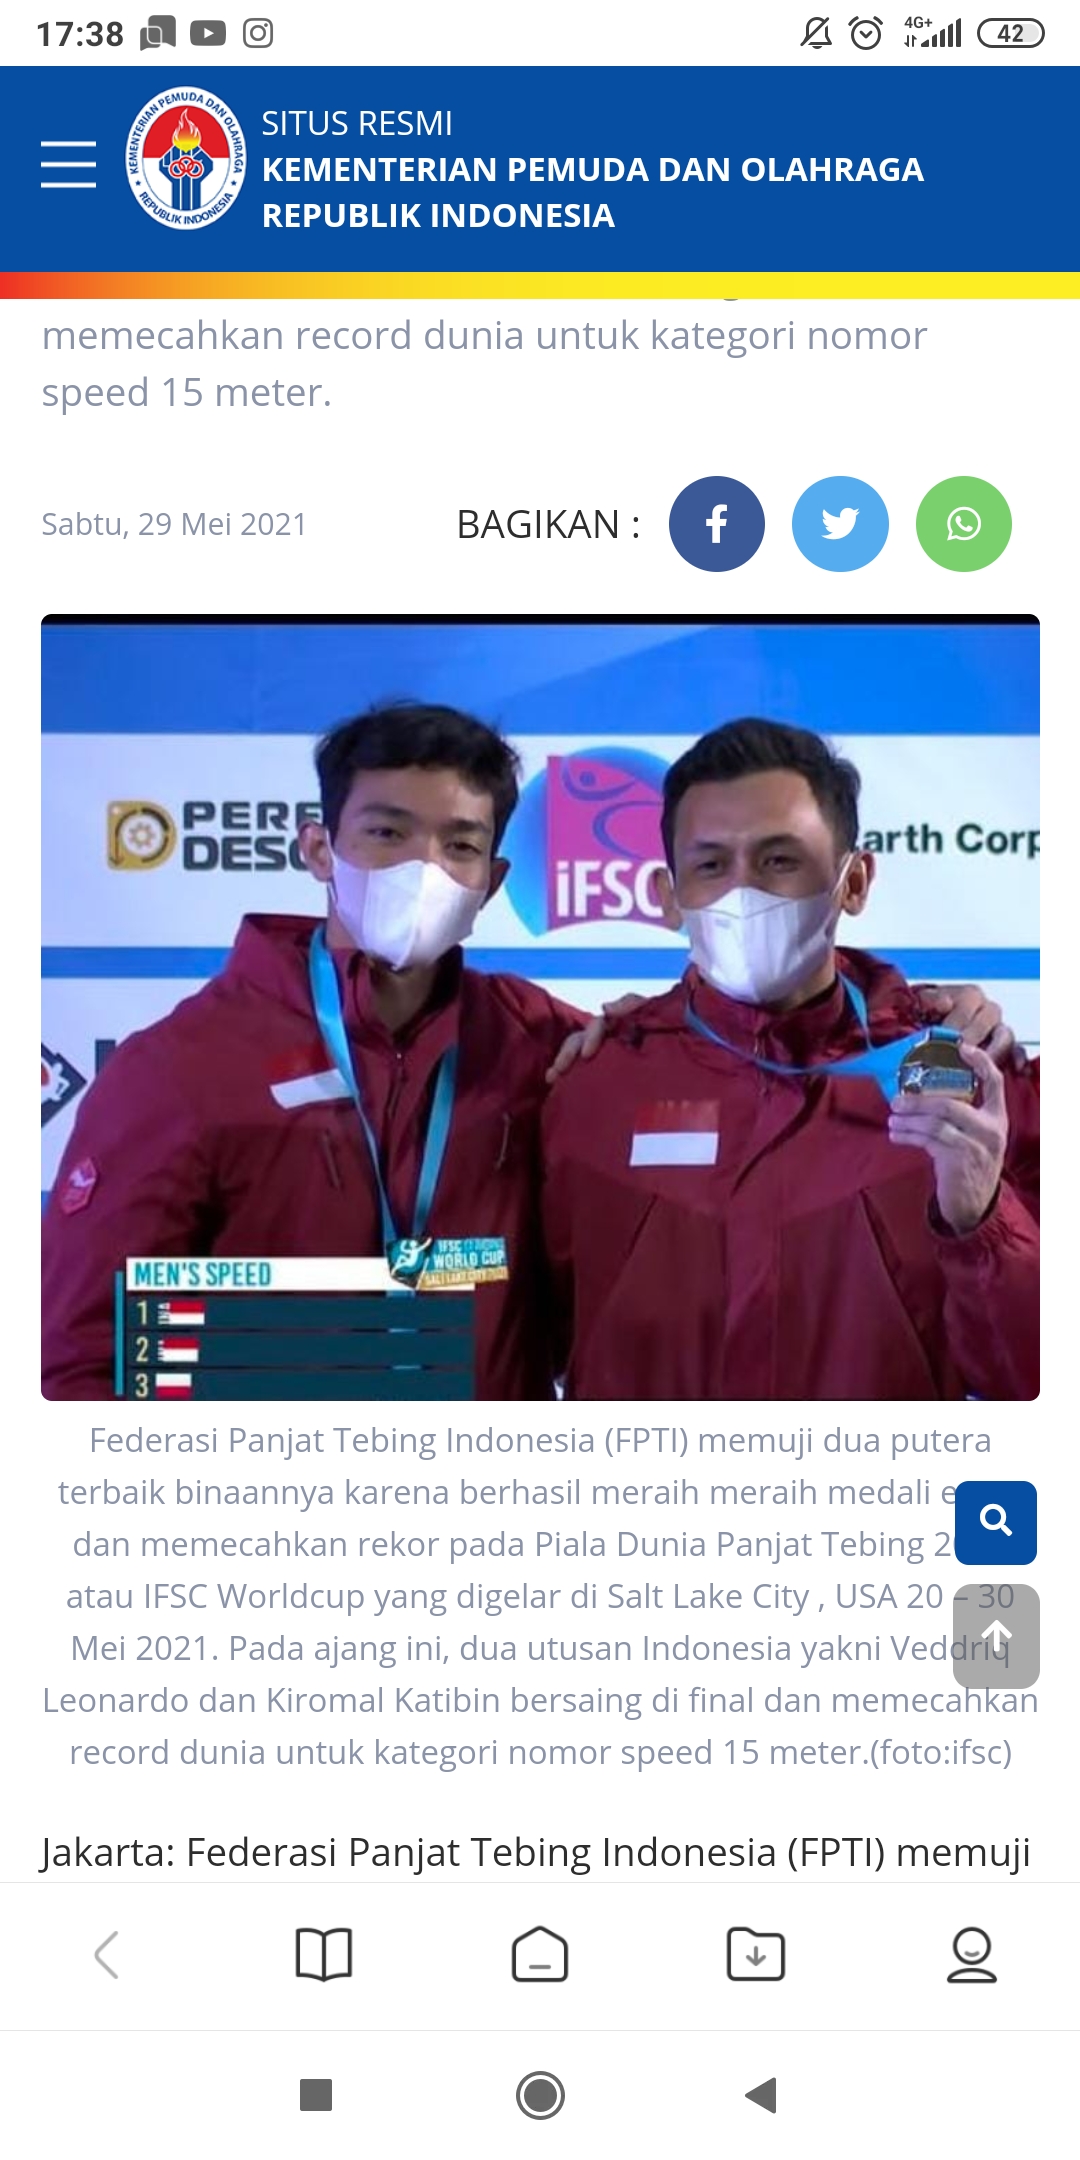 Veddriq Leonardo Menang di Piala Dunia Panjat Tebing, Bukti Indonesia Penguasa Nomor Speed